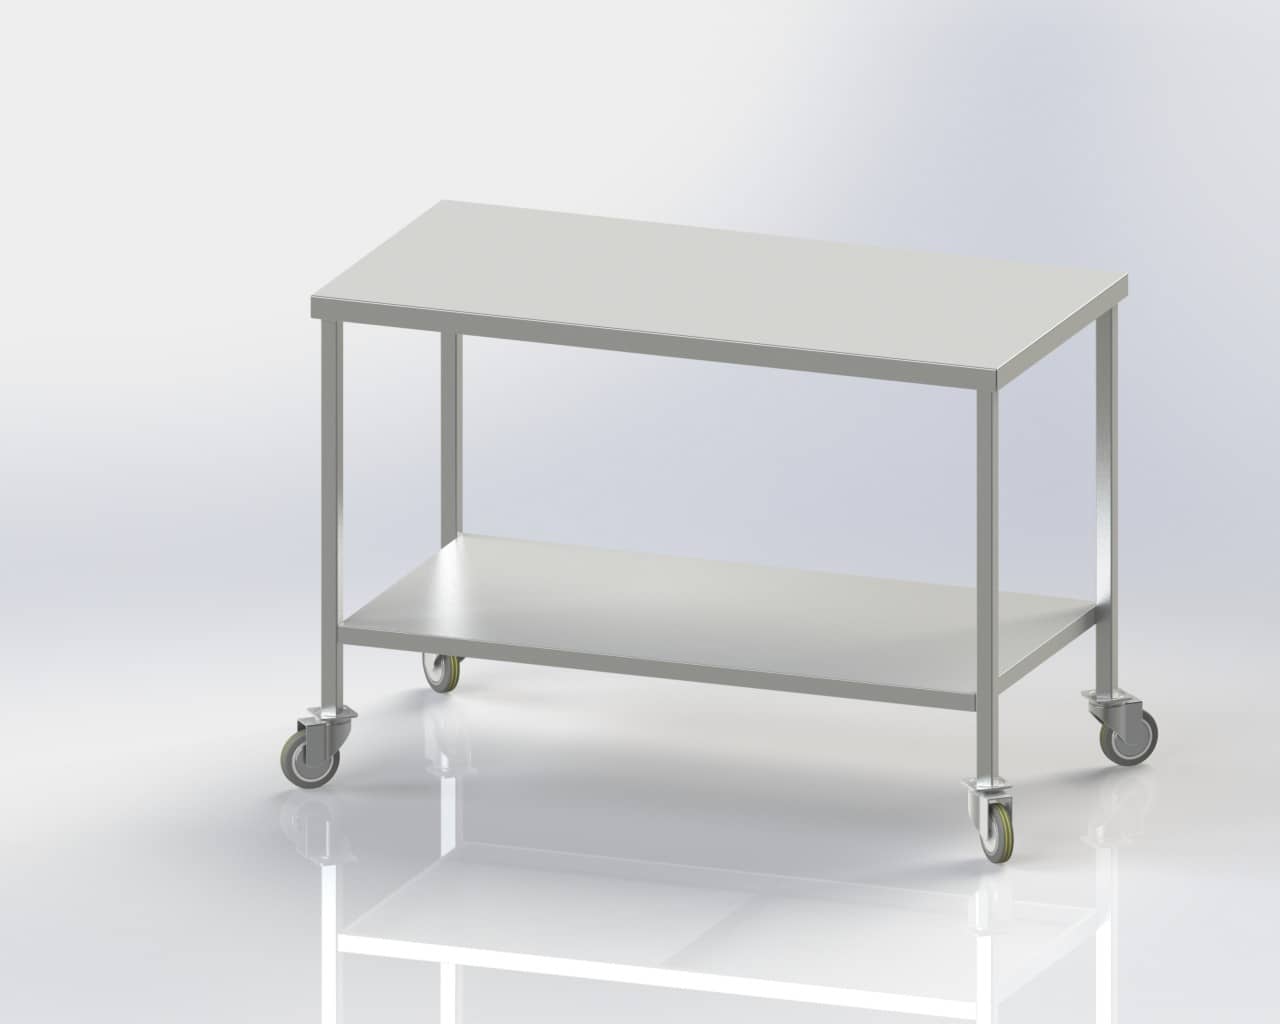 Mobile Table/Lower shelf